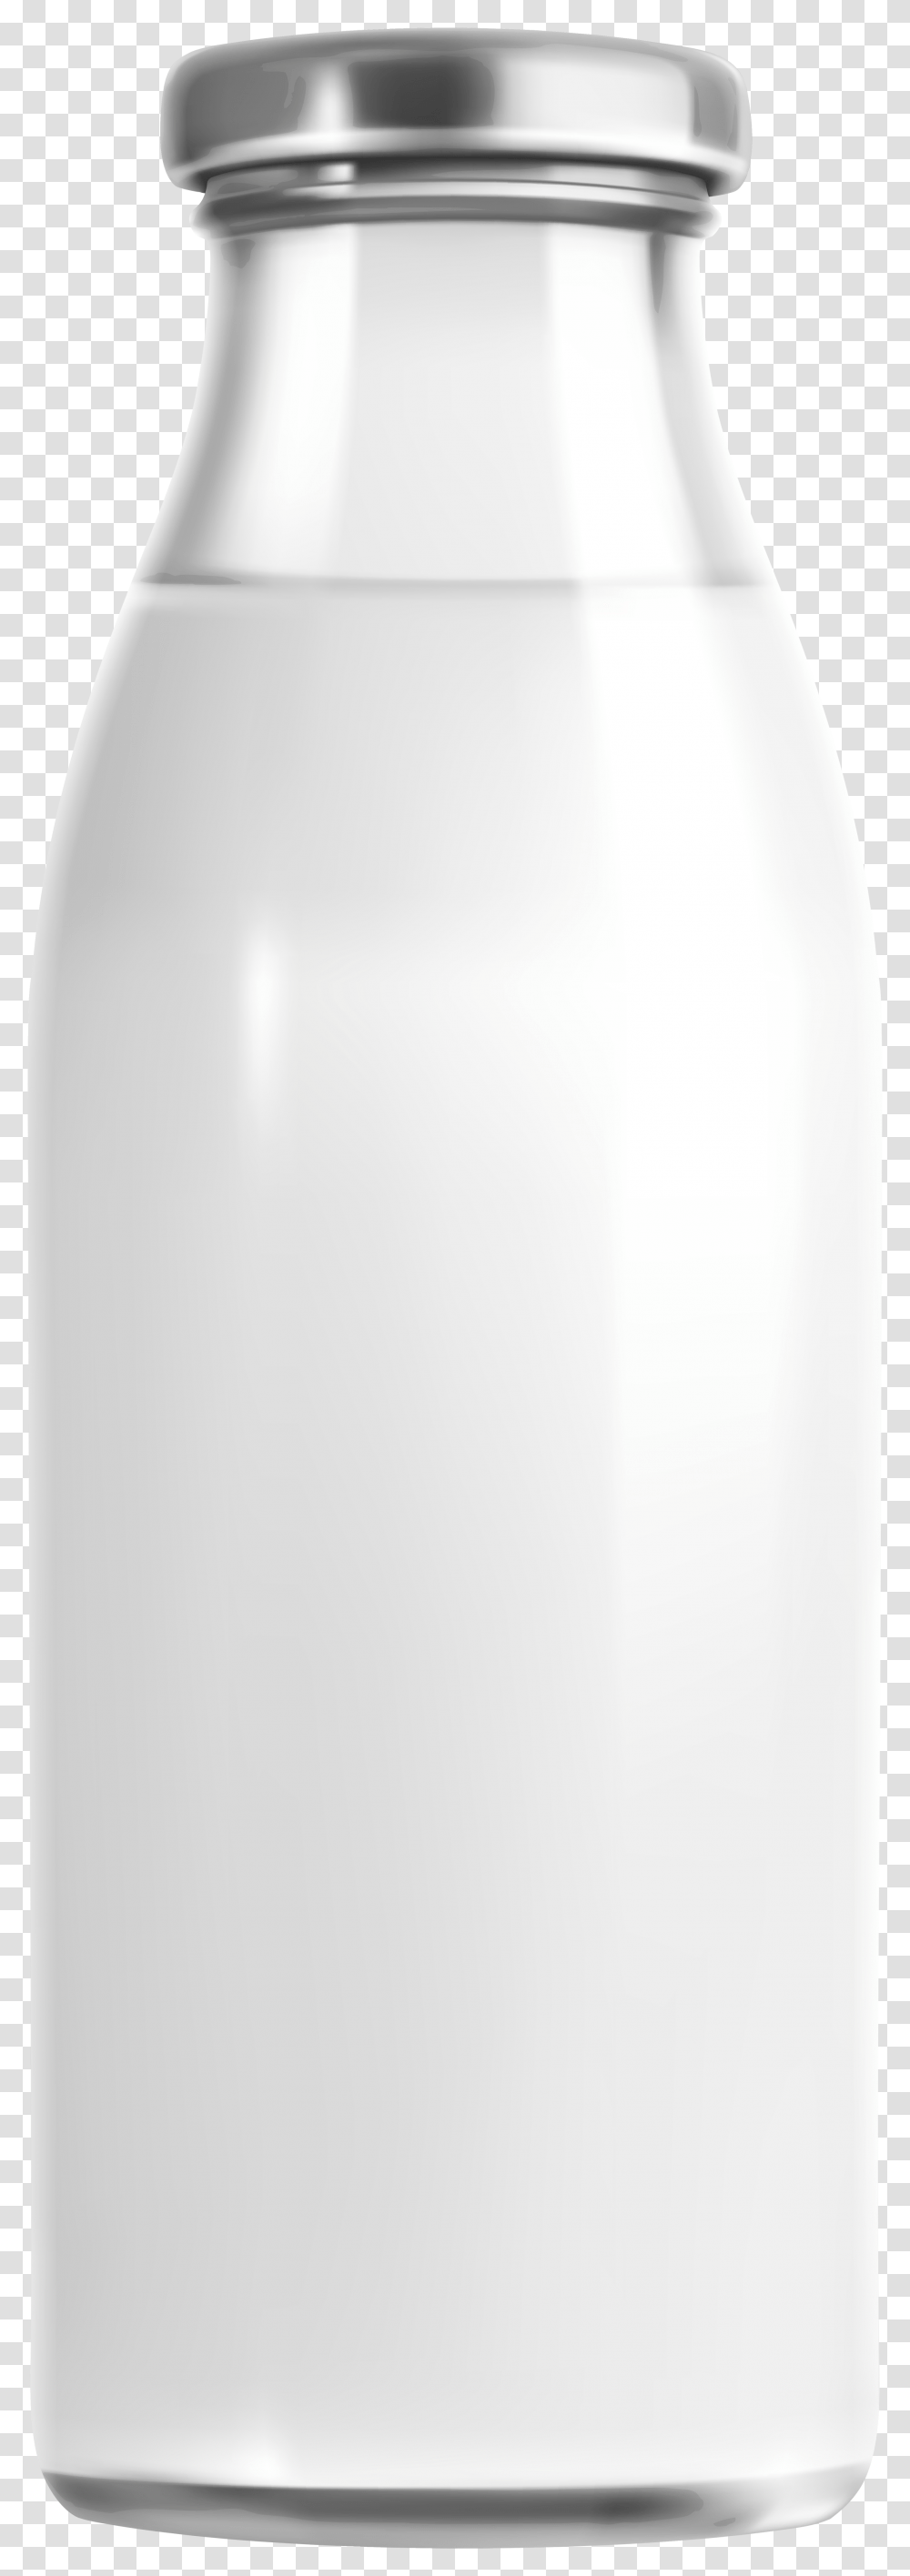 Image Black And White Stock Water Glass Realistic Bottled Milk Bottle Glass, Shaker, Jar, Beverage, Drink Transparent Png